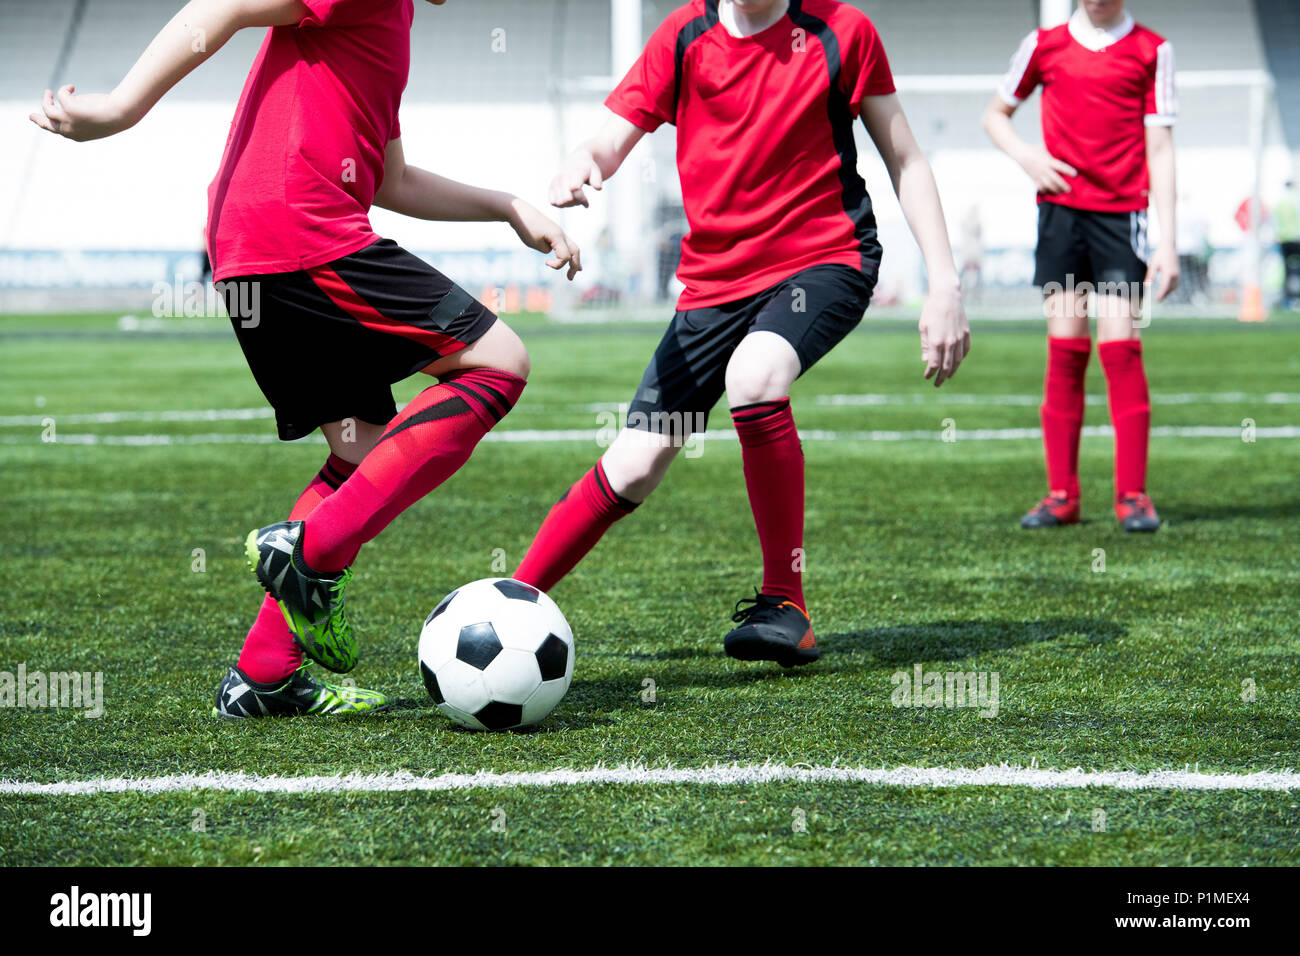 They play football well. Фото мальчик играет в футбол. Парень играет в футбол. Teenagers playing Football. Дети играют в футбол на стадионе.